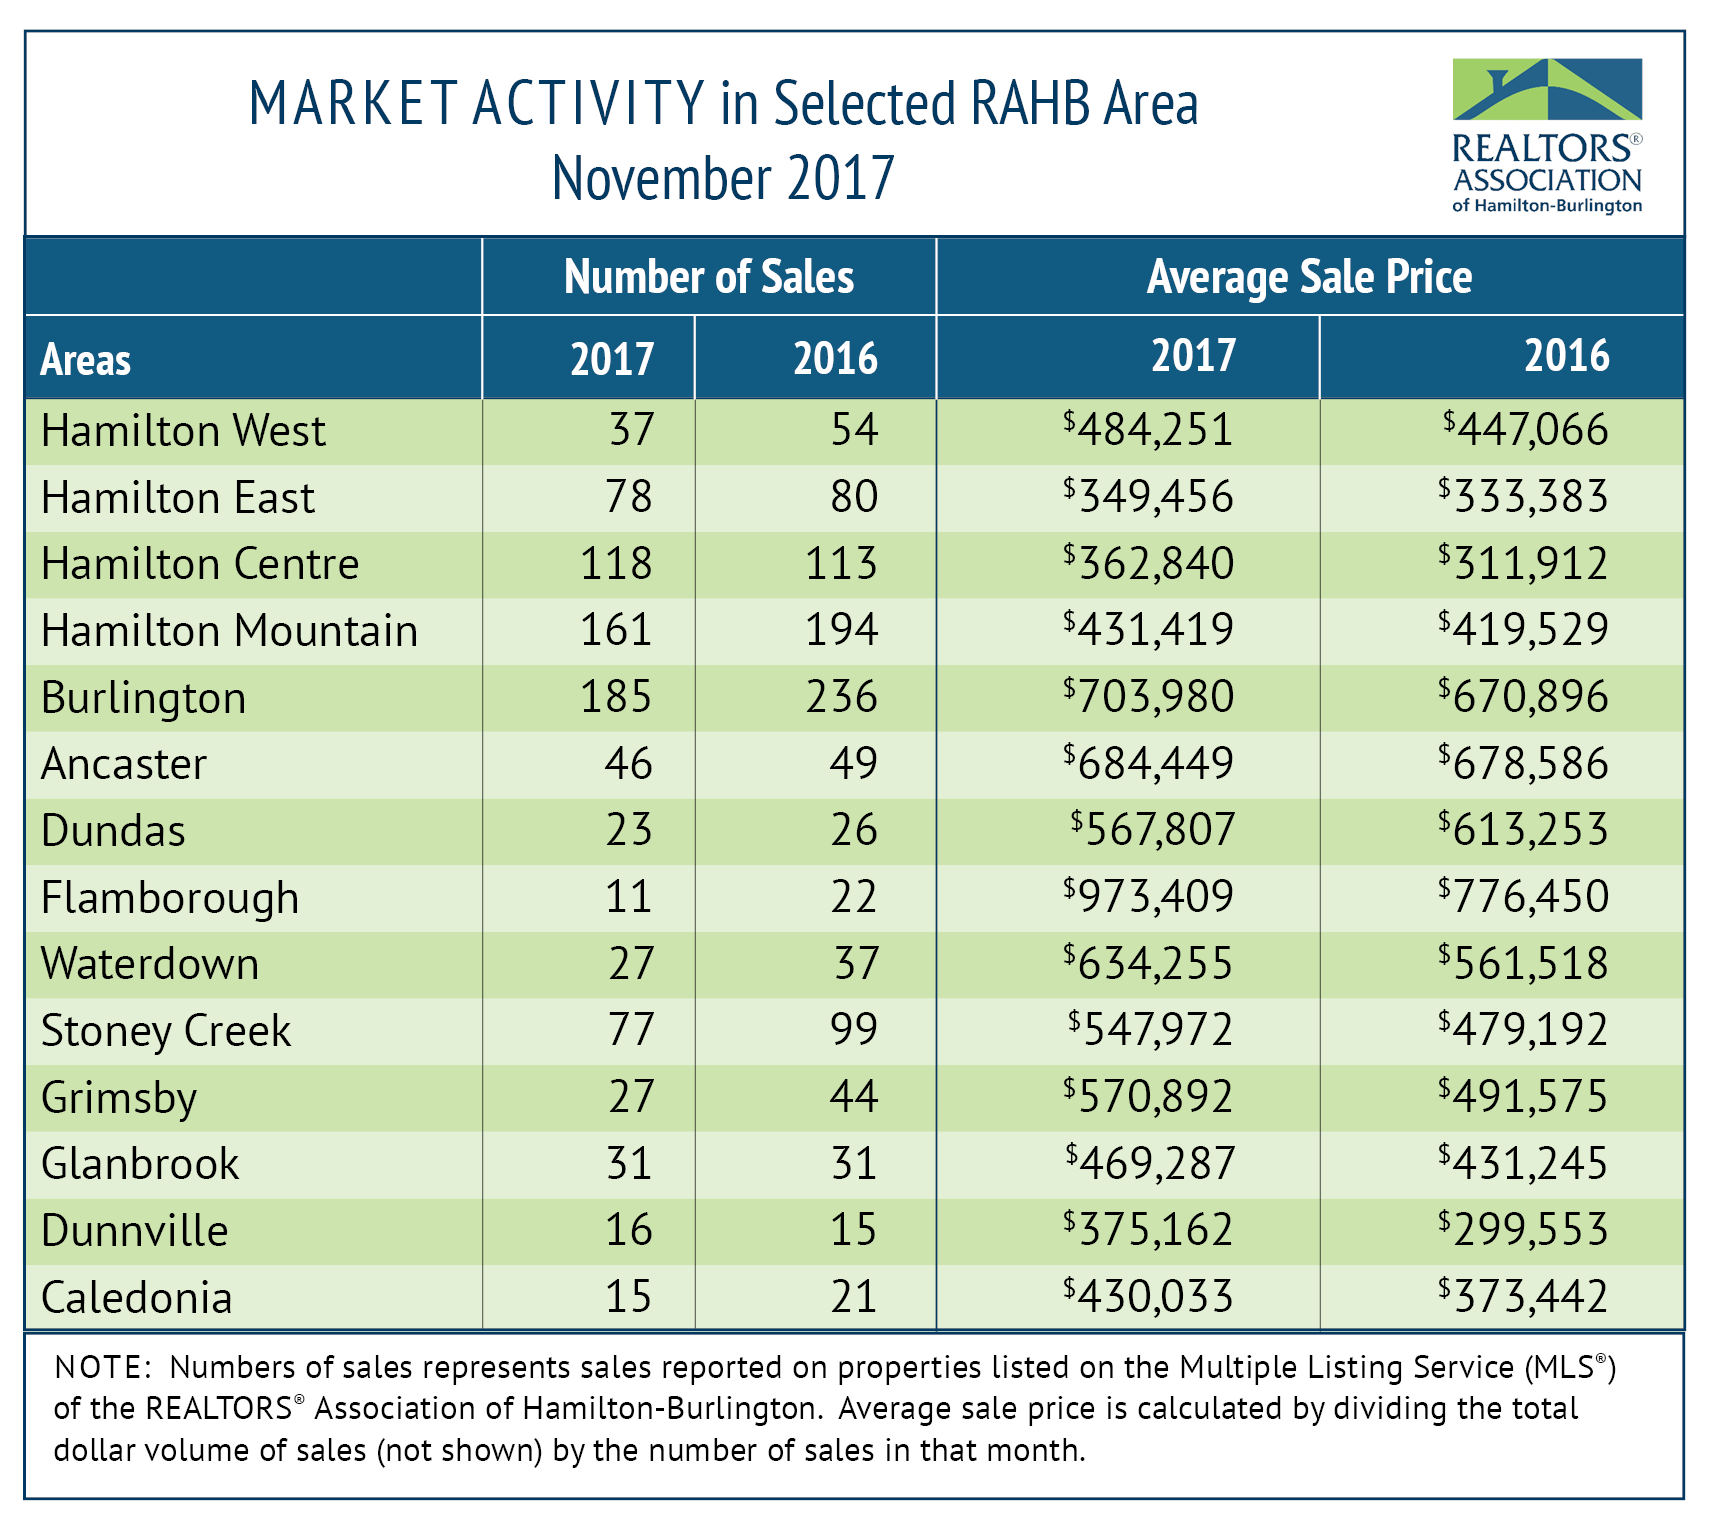 RAHB Market Activity for Nov 2017